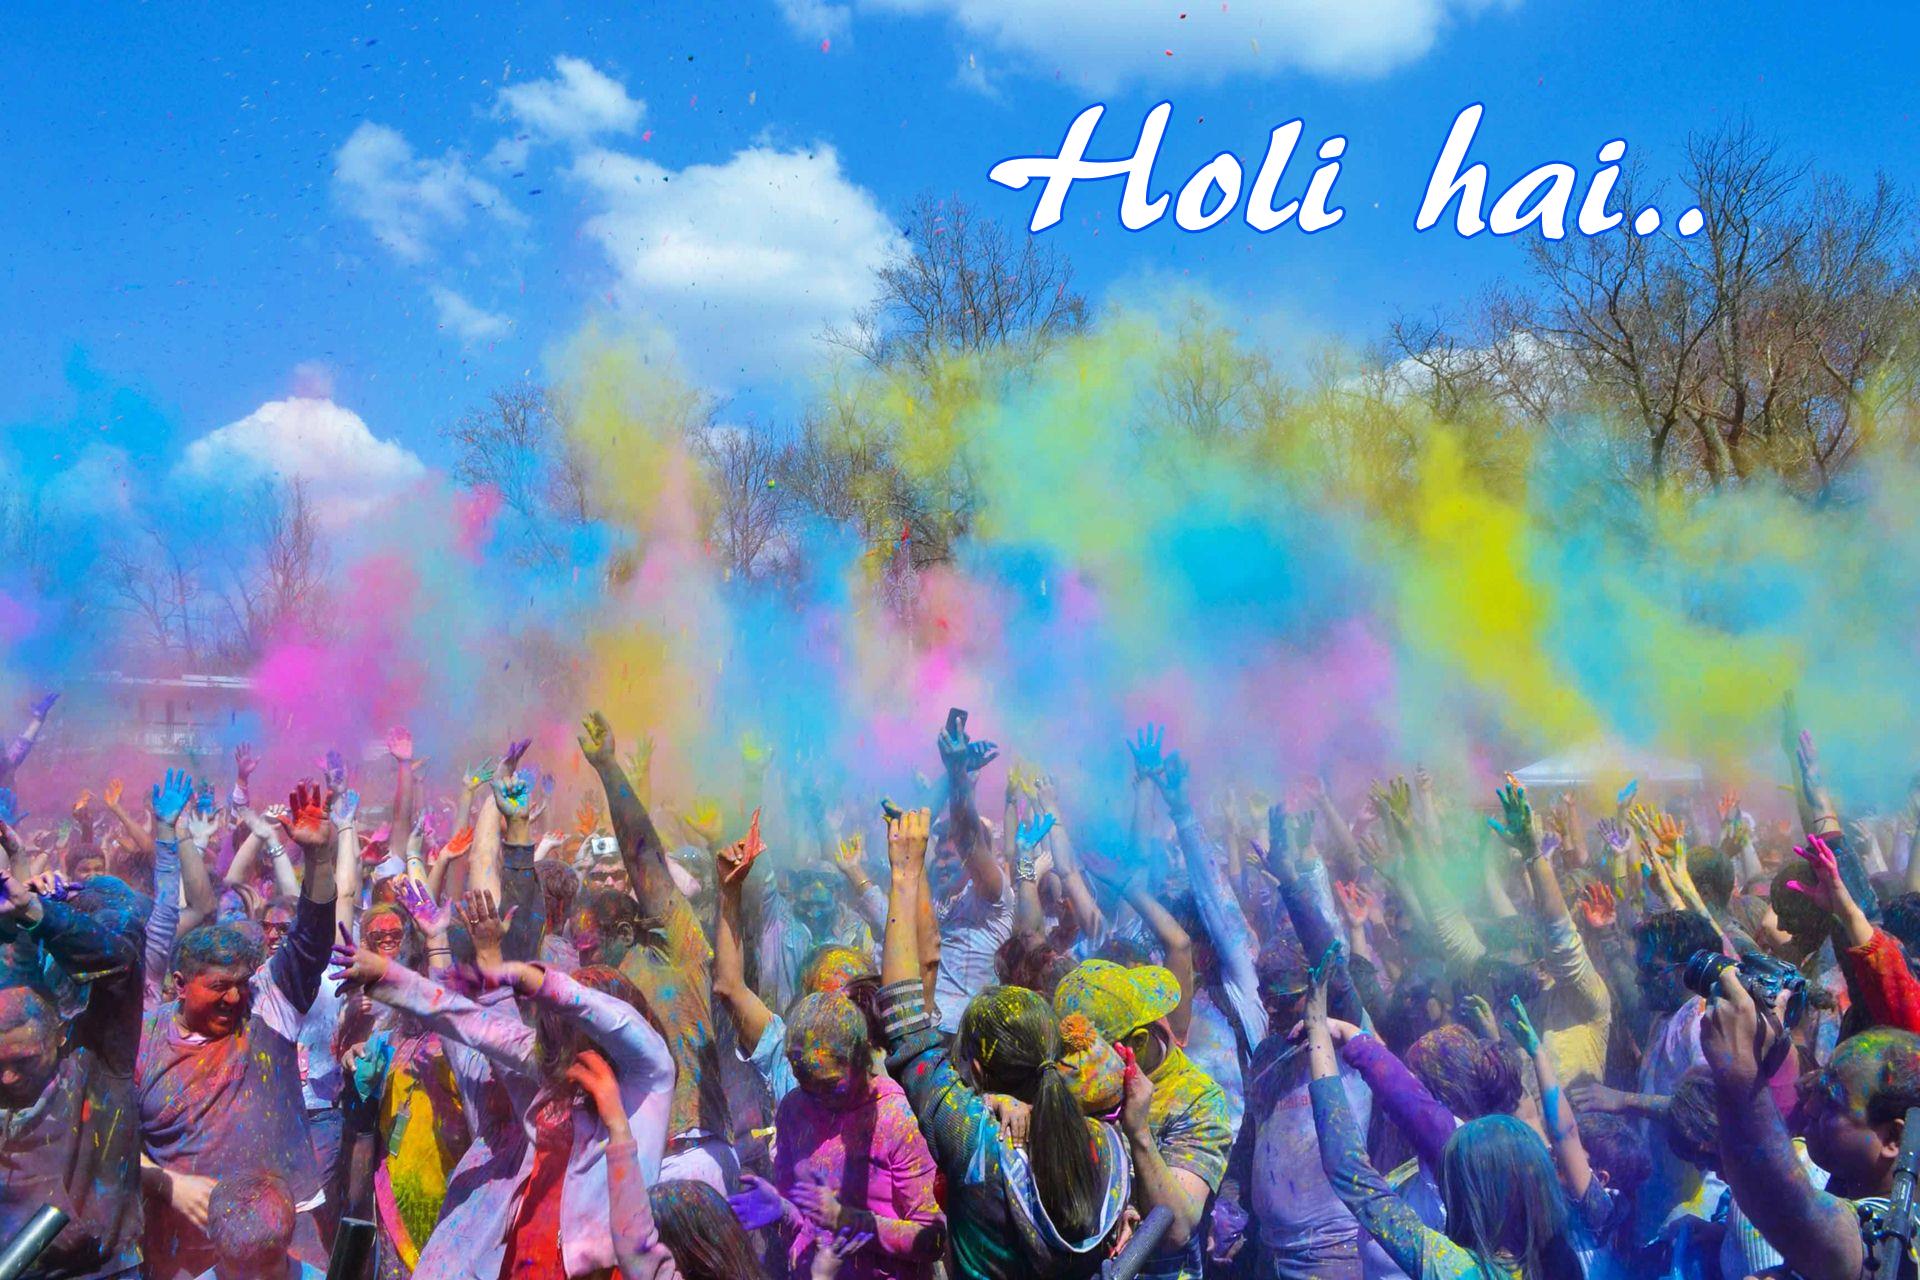 2023 Best Happy Holi Wishes Images Banner Photos In Marathi